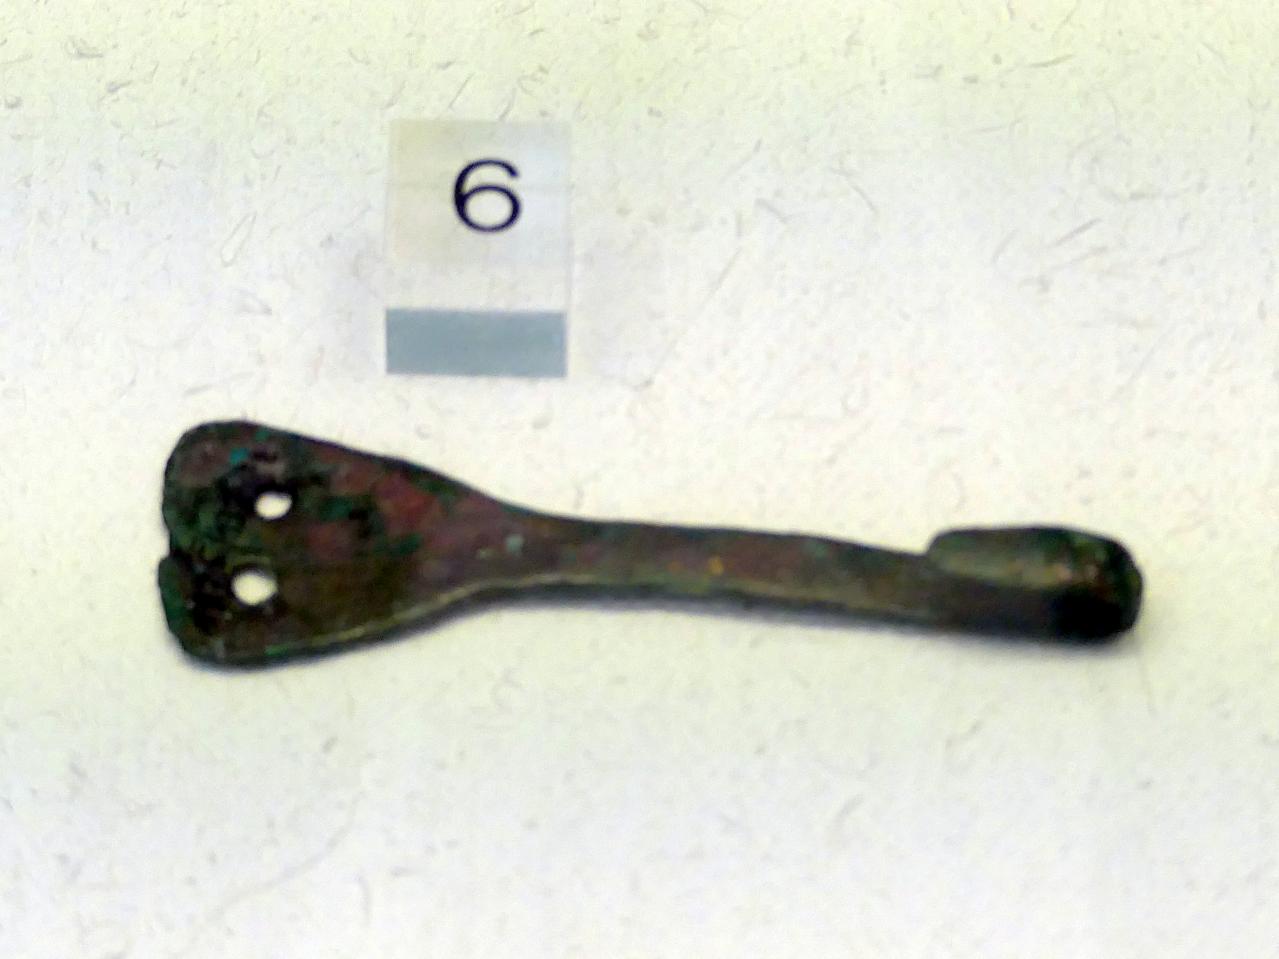 Gürtelhaken, Bronzezeit, 3365 - 700 v. Chr., Bild 1/3